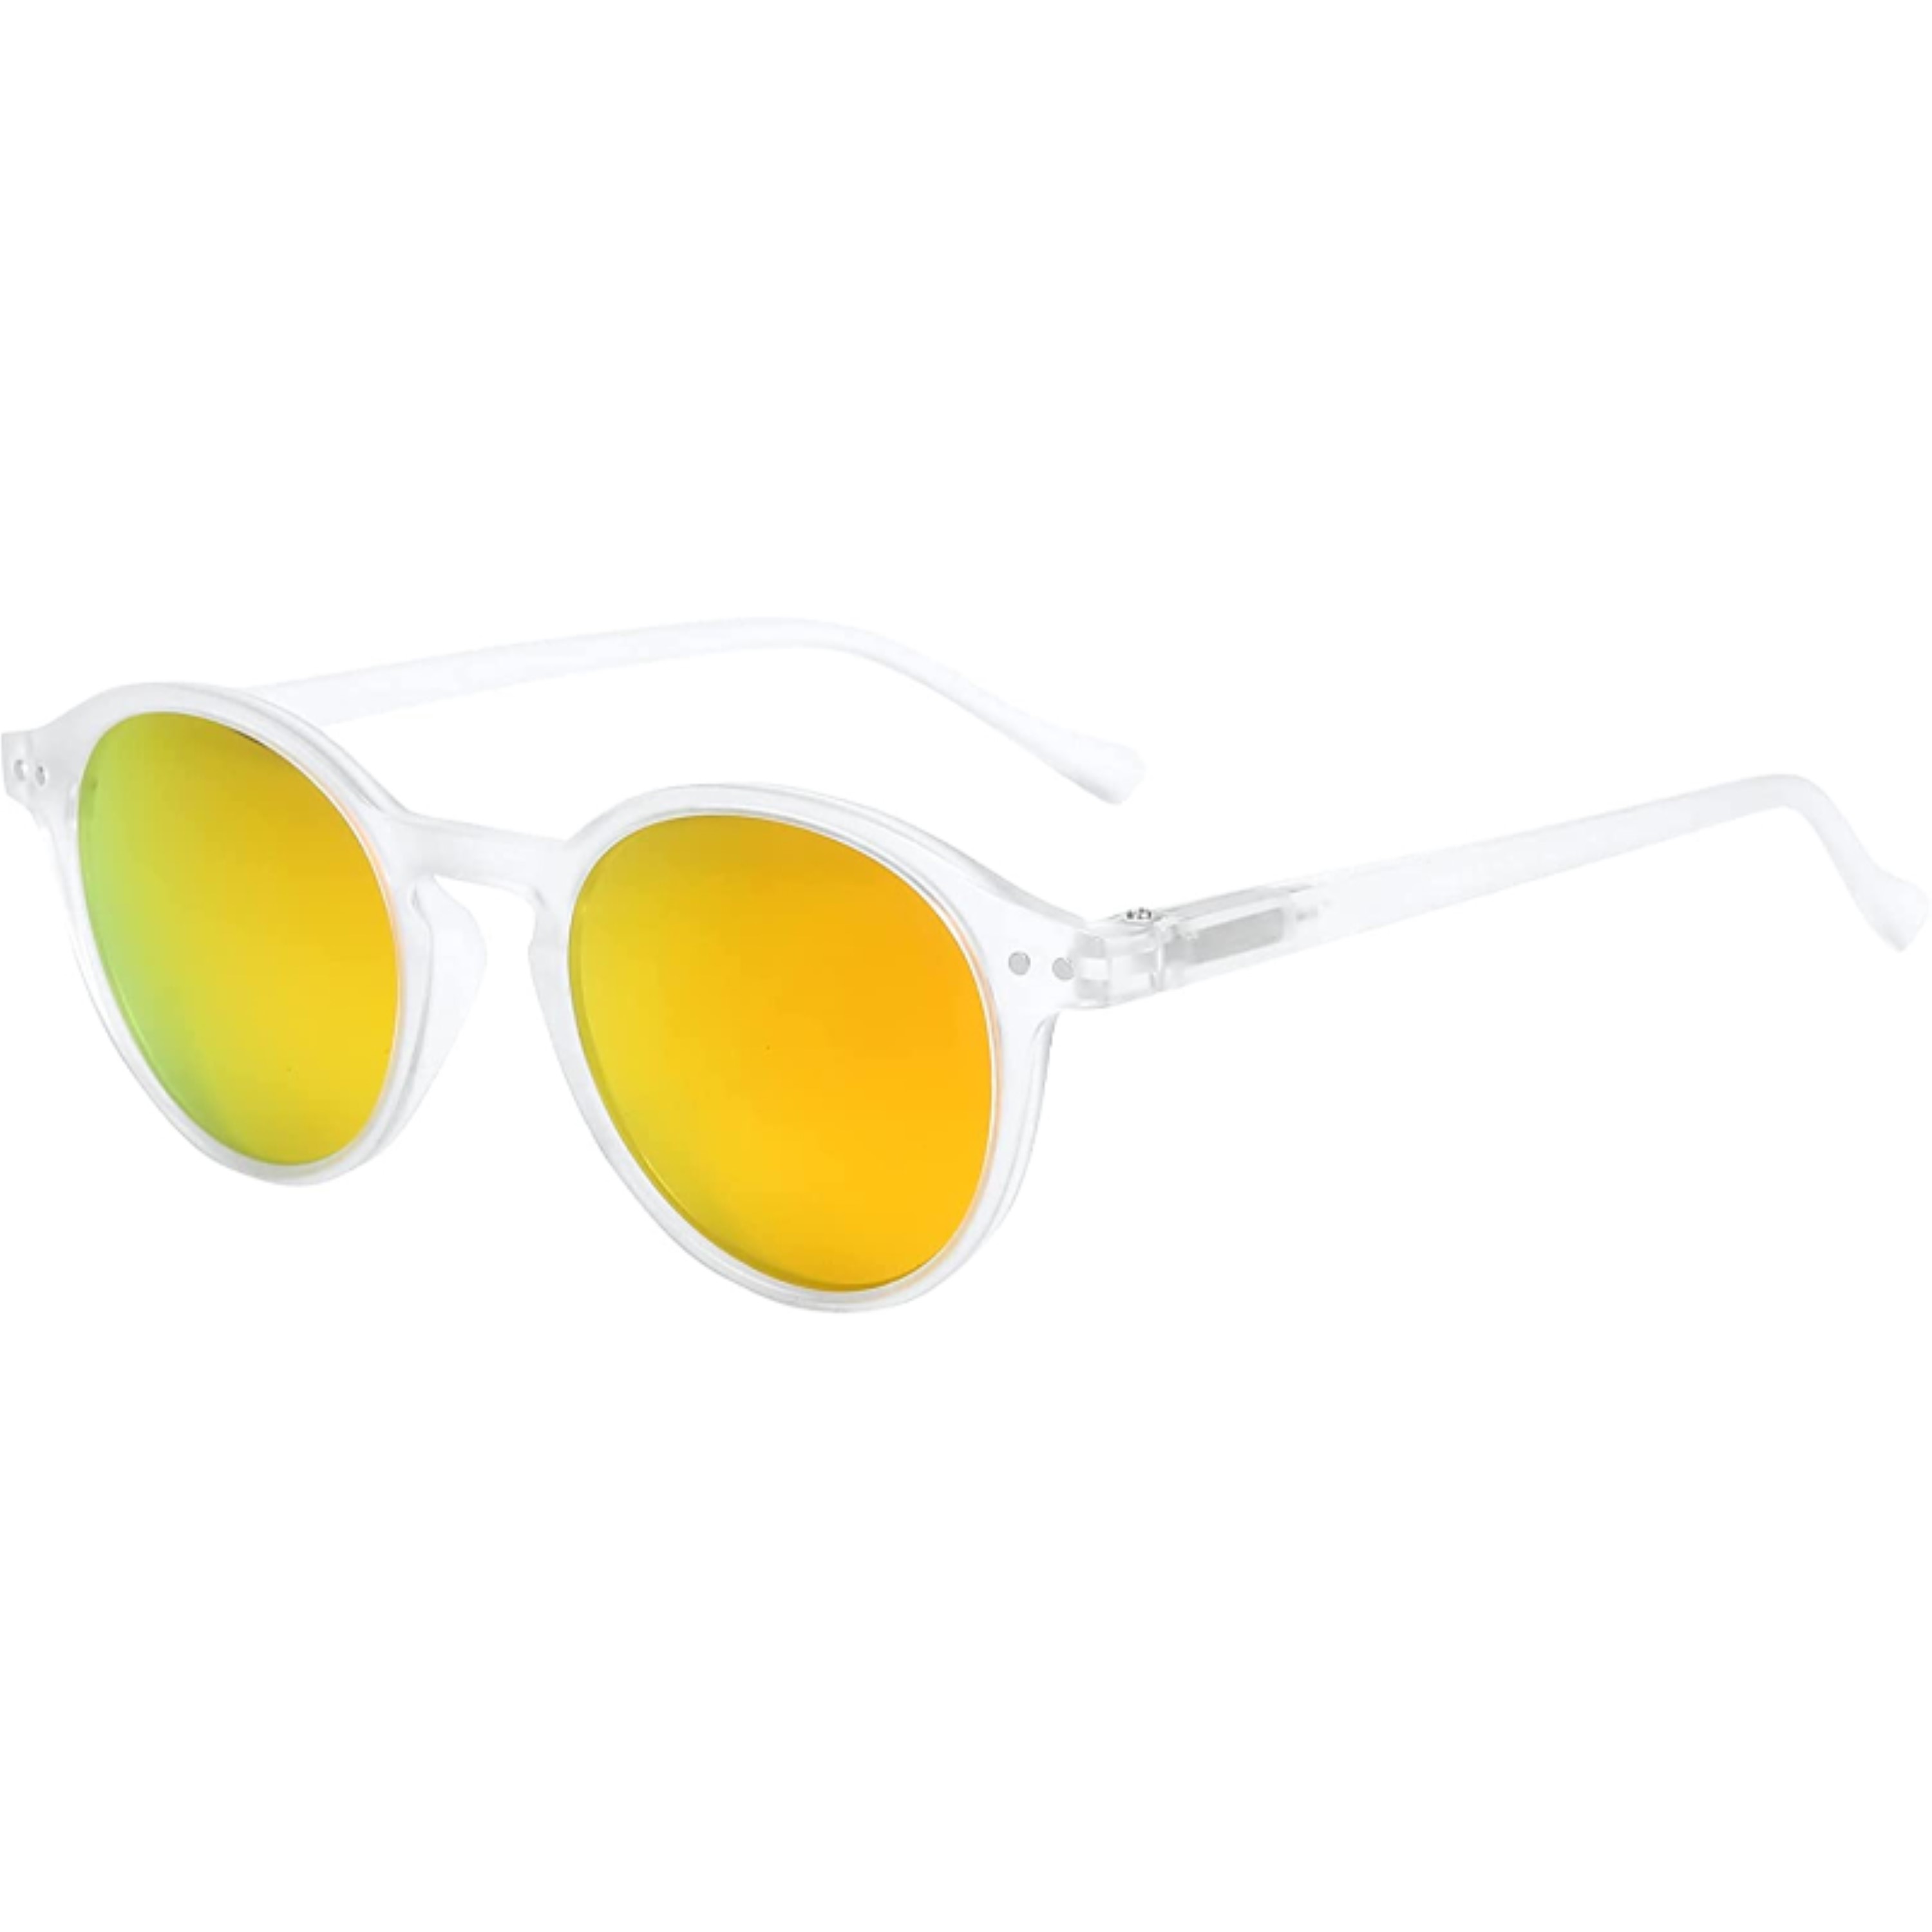 ZENOTTIC Polarized Round Sunglasses, Stylish Sunglasses for Men and Women  Retro Classic, Multi-Style Selection